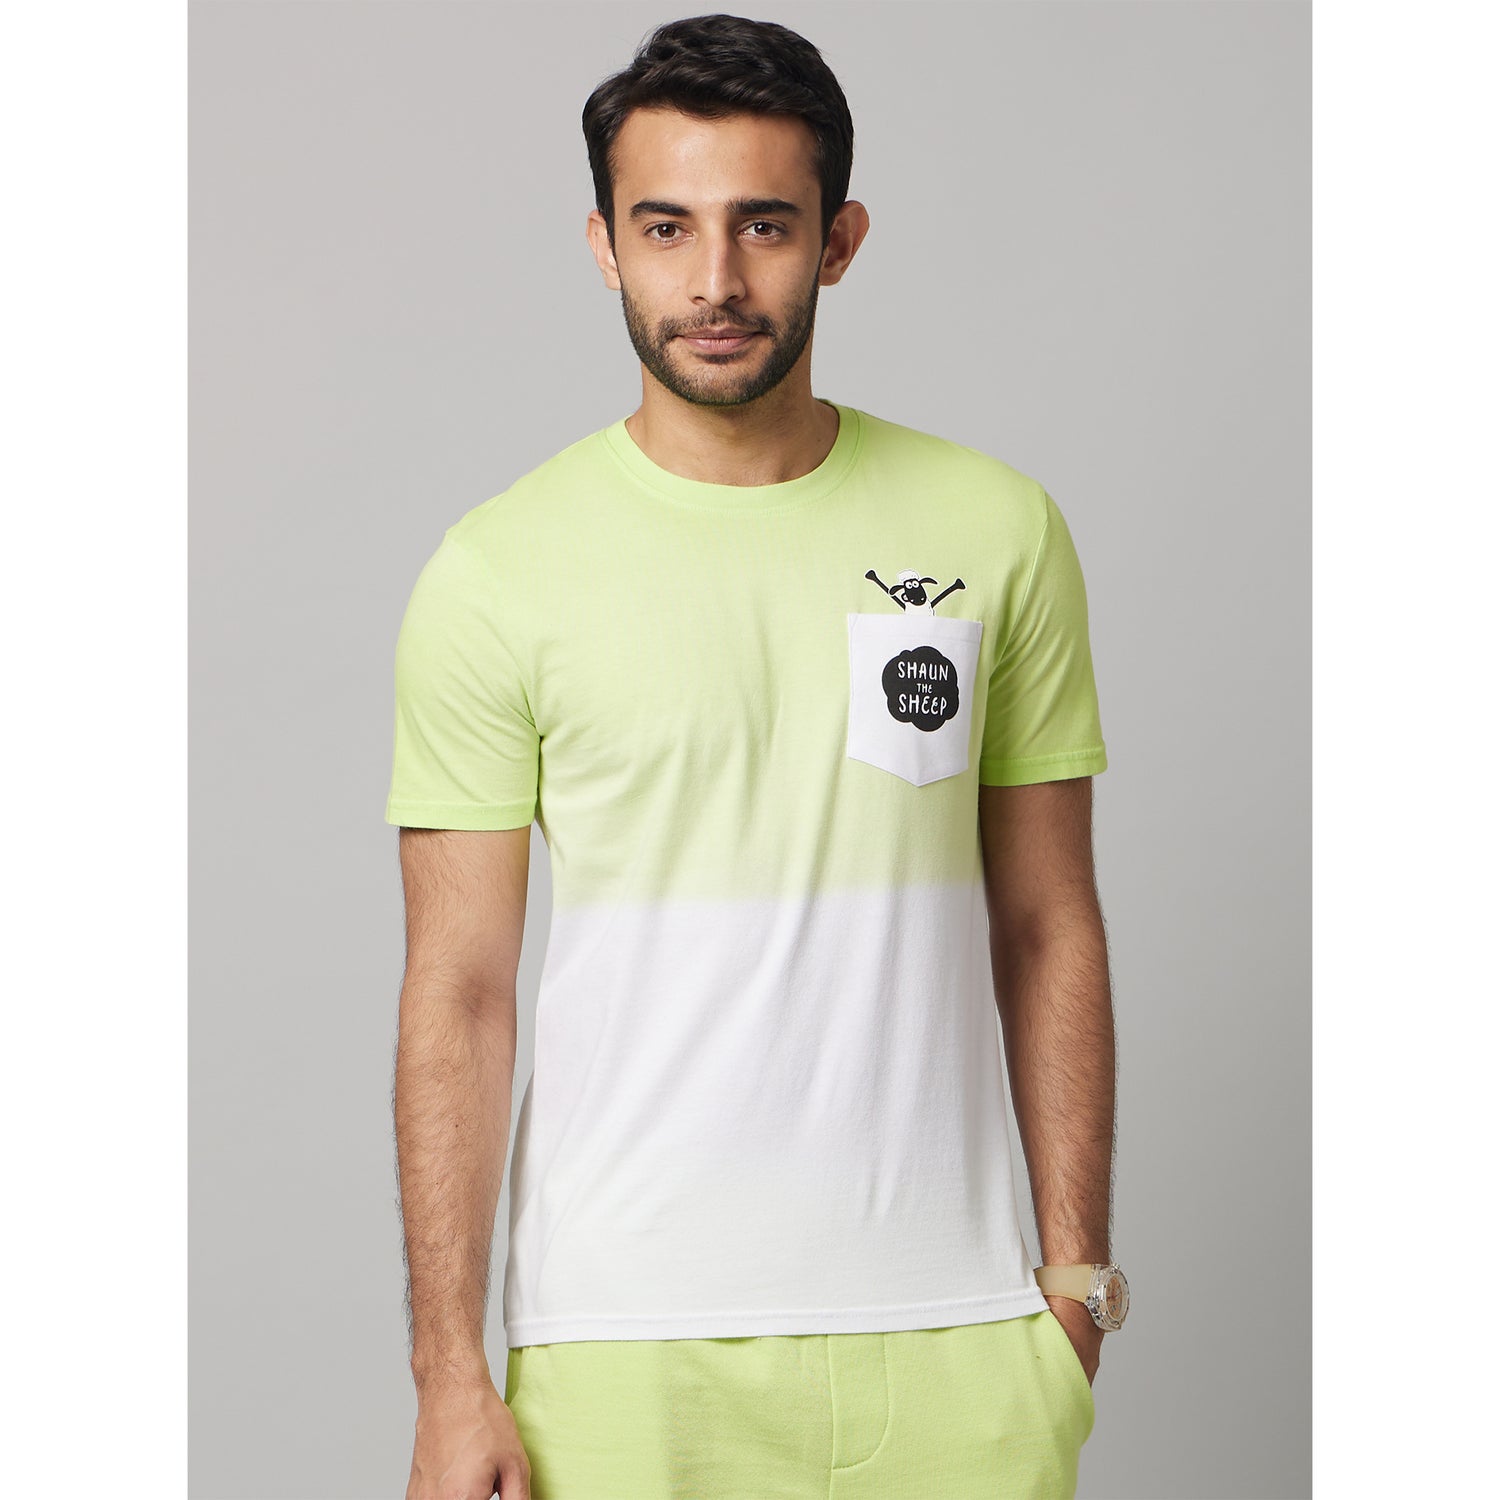 Shaun the Sheep - Neon Green Colourblocked Round Neck Cotton T-shirt (LCESHAUN3)